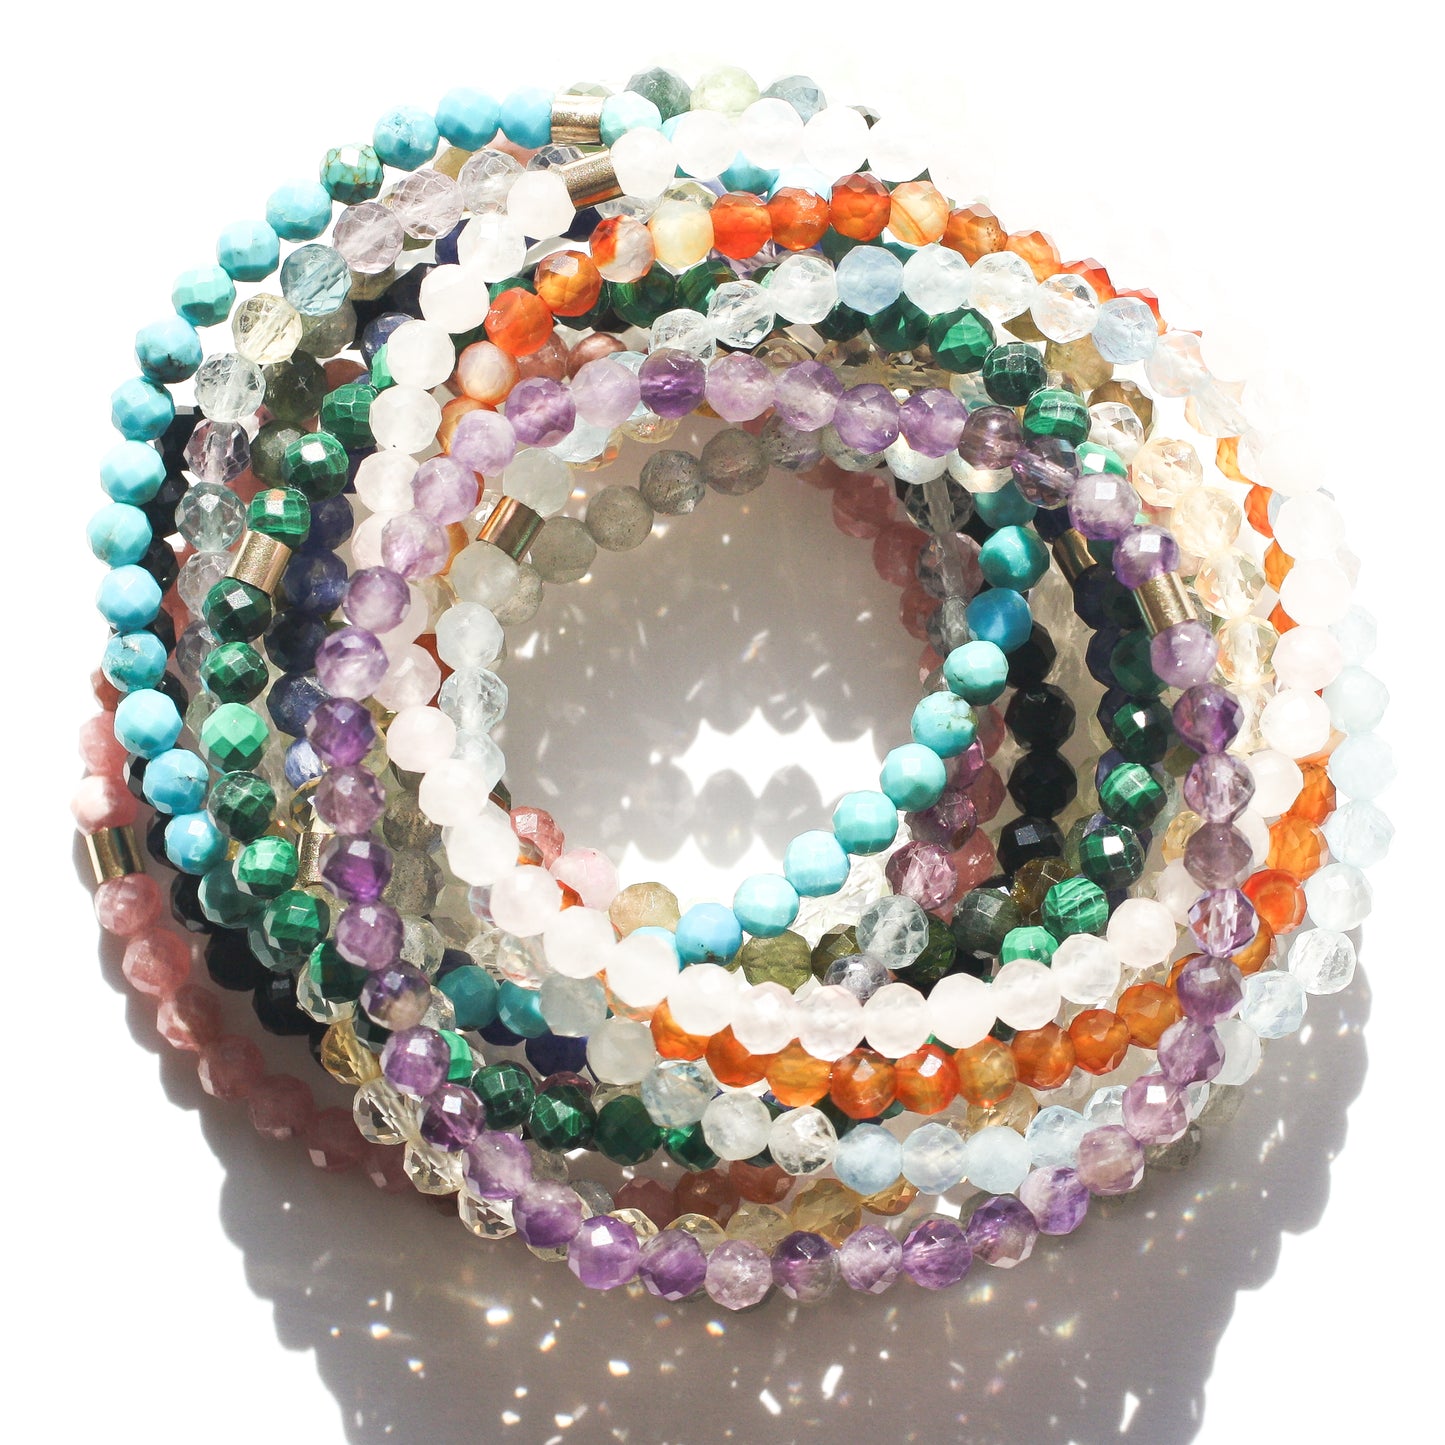 Pile of stones-only bracelets